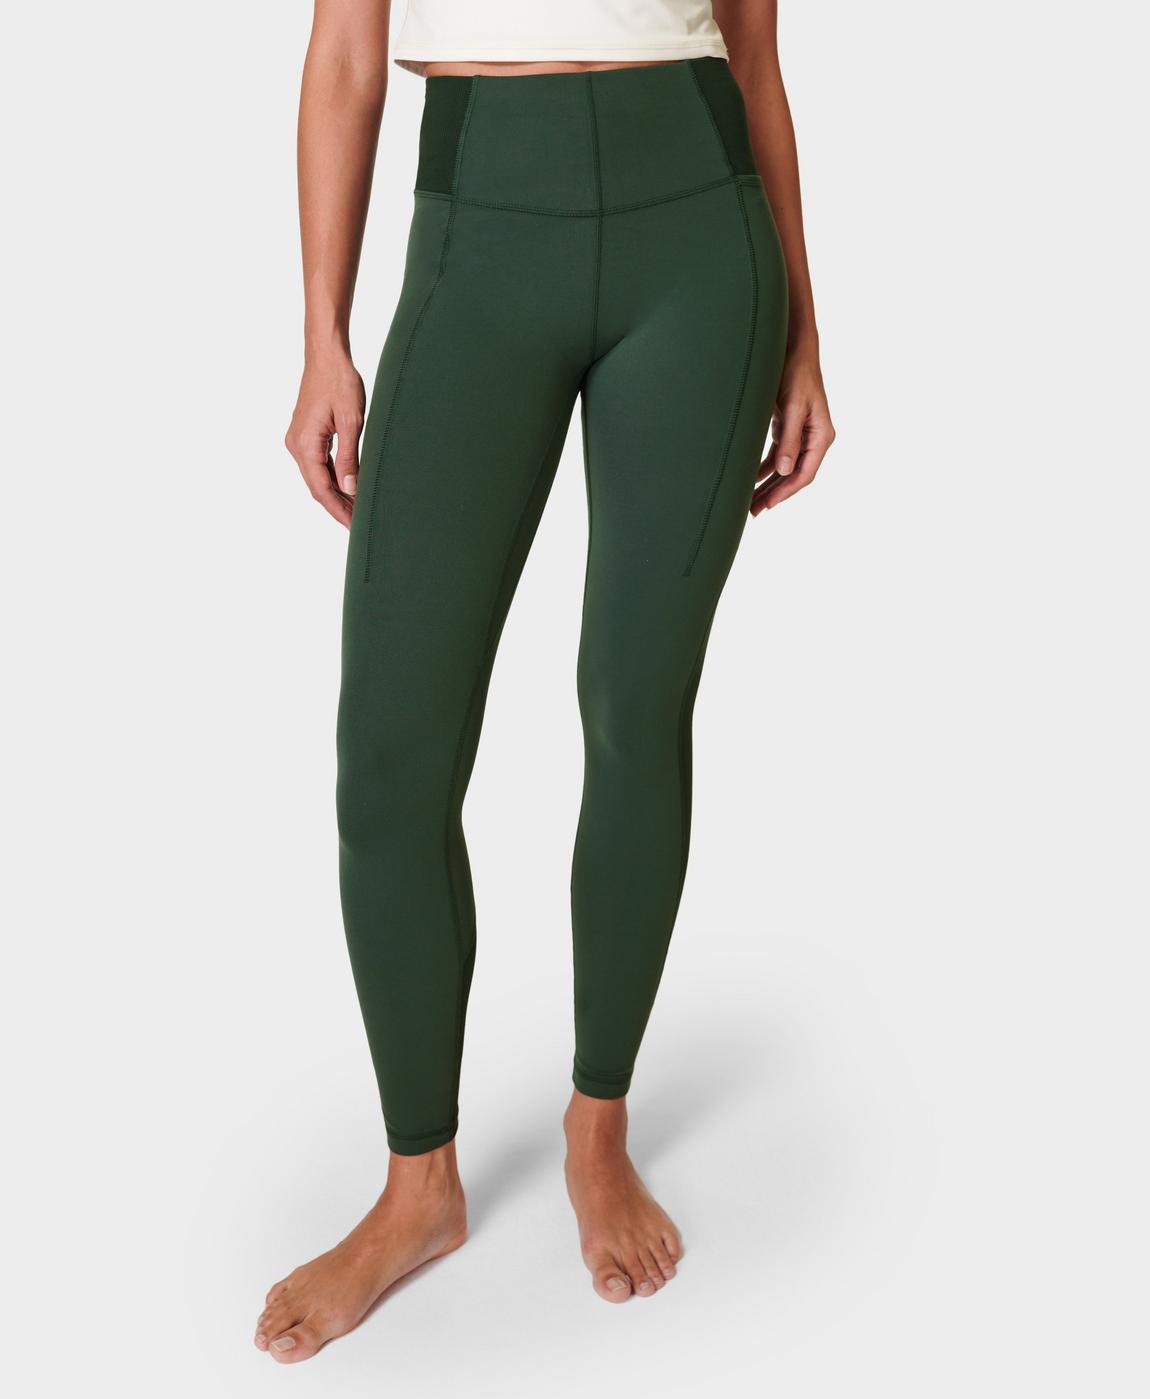 green yoga tights